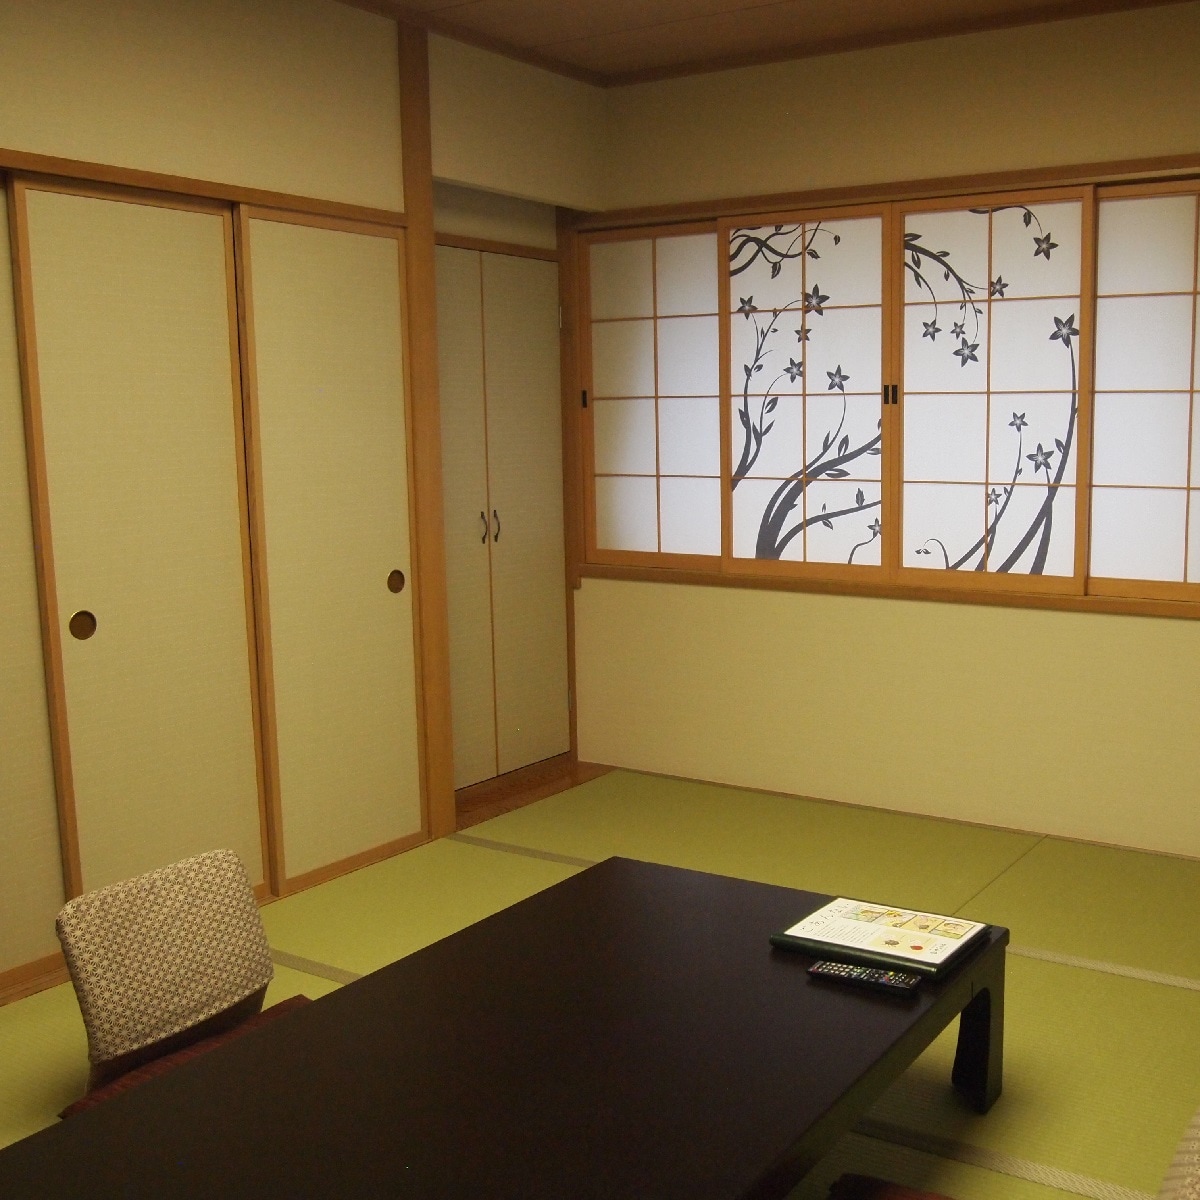 Main building standard Japanese-style room (10 tatami mats)